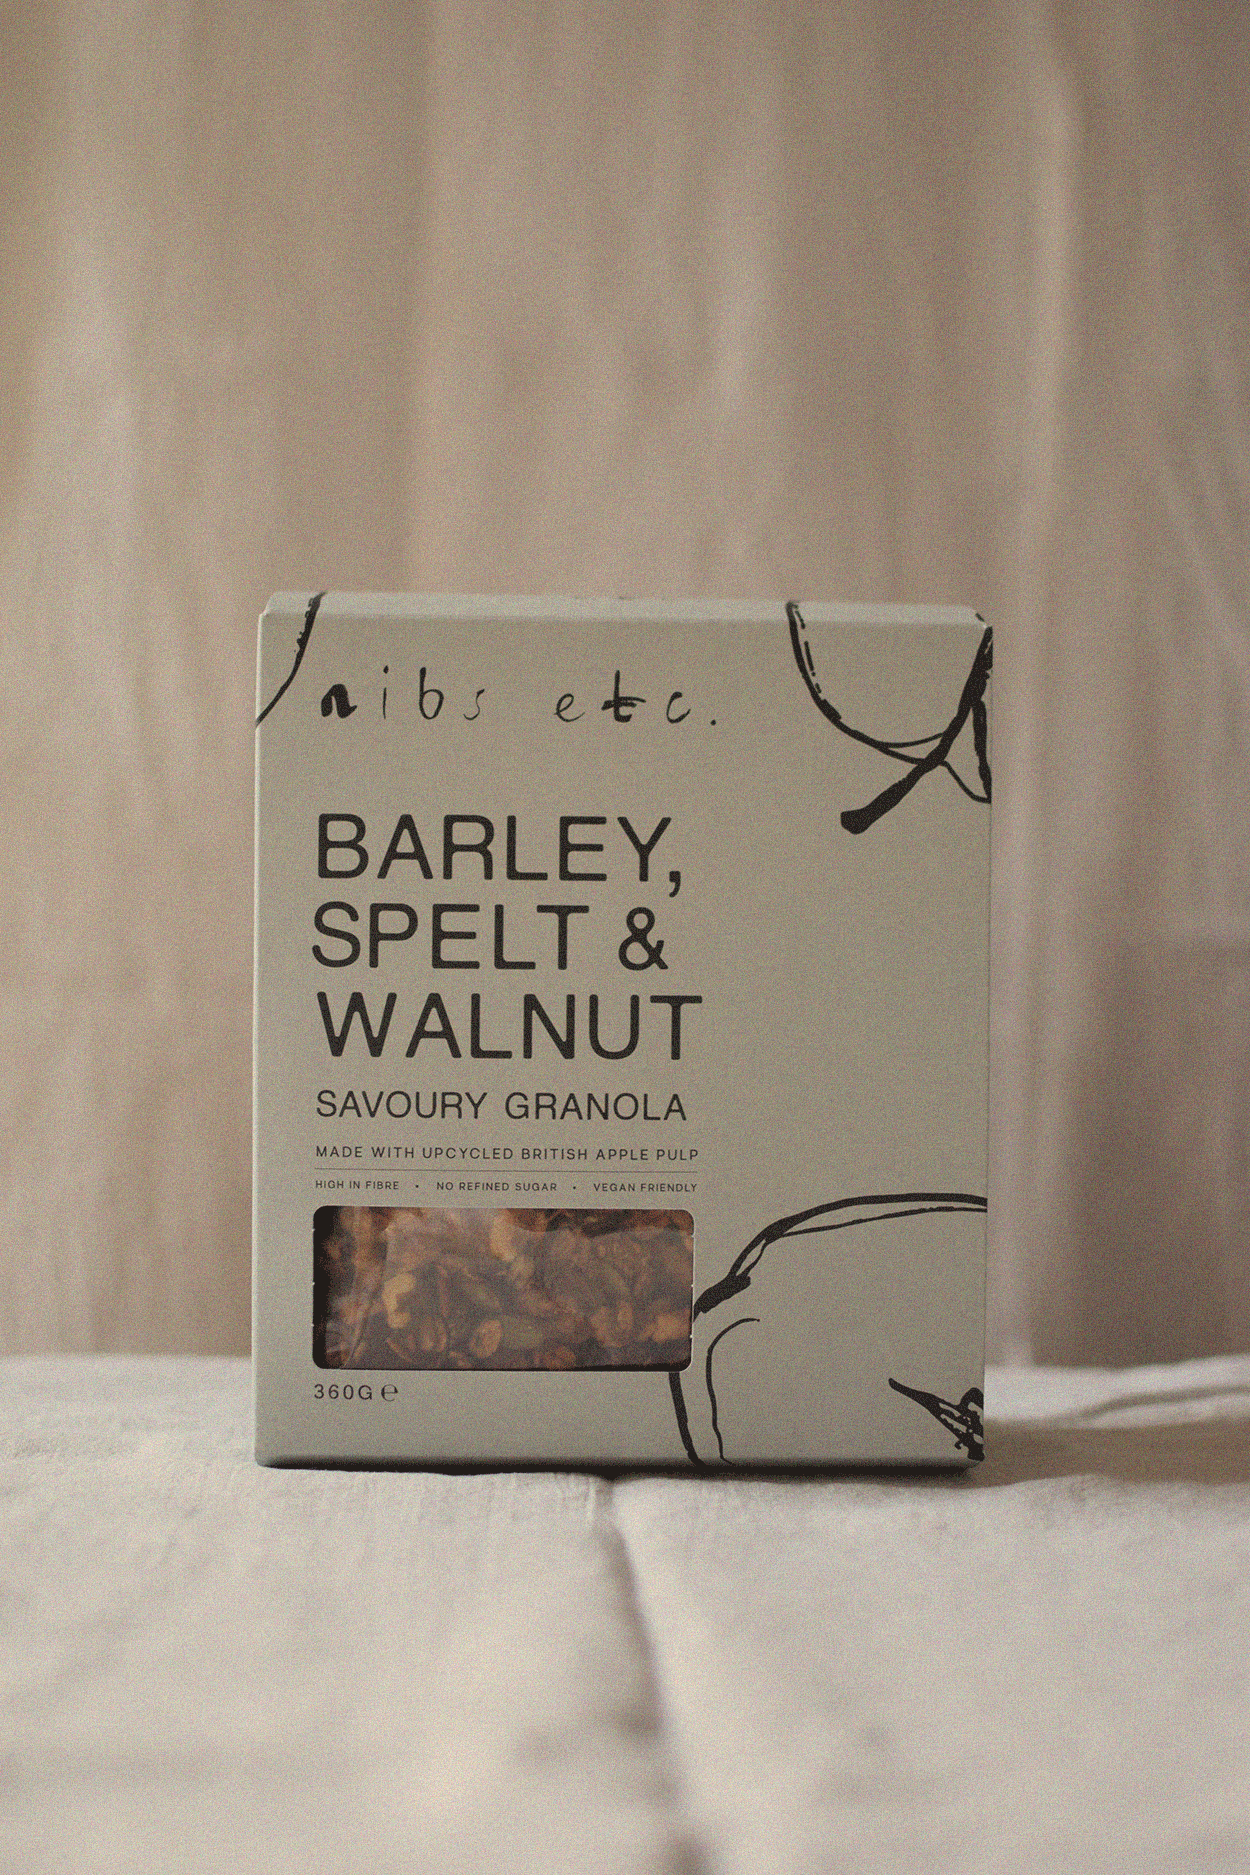 360g Barley, Spelt & Walnut Savoury Granola